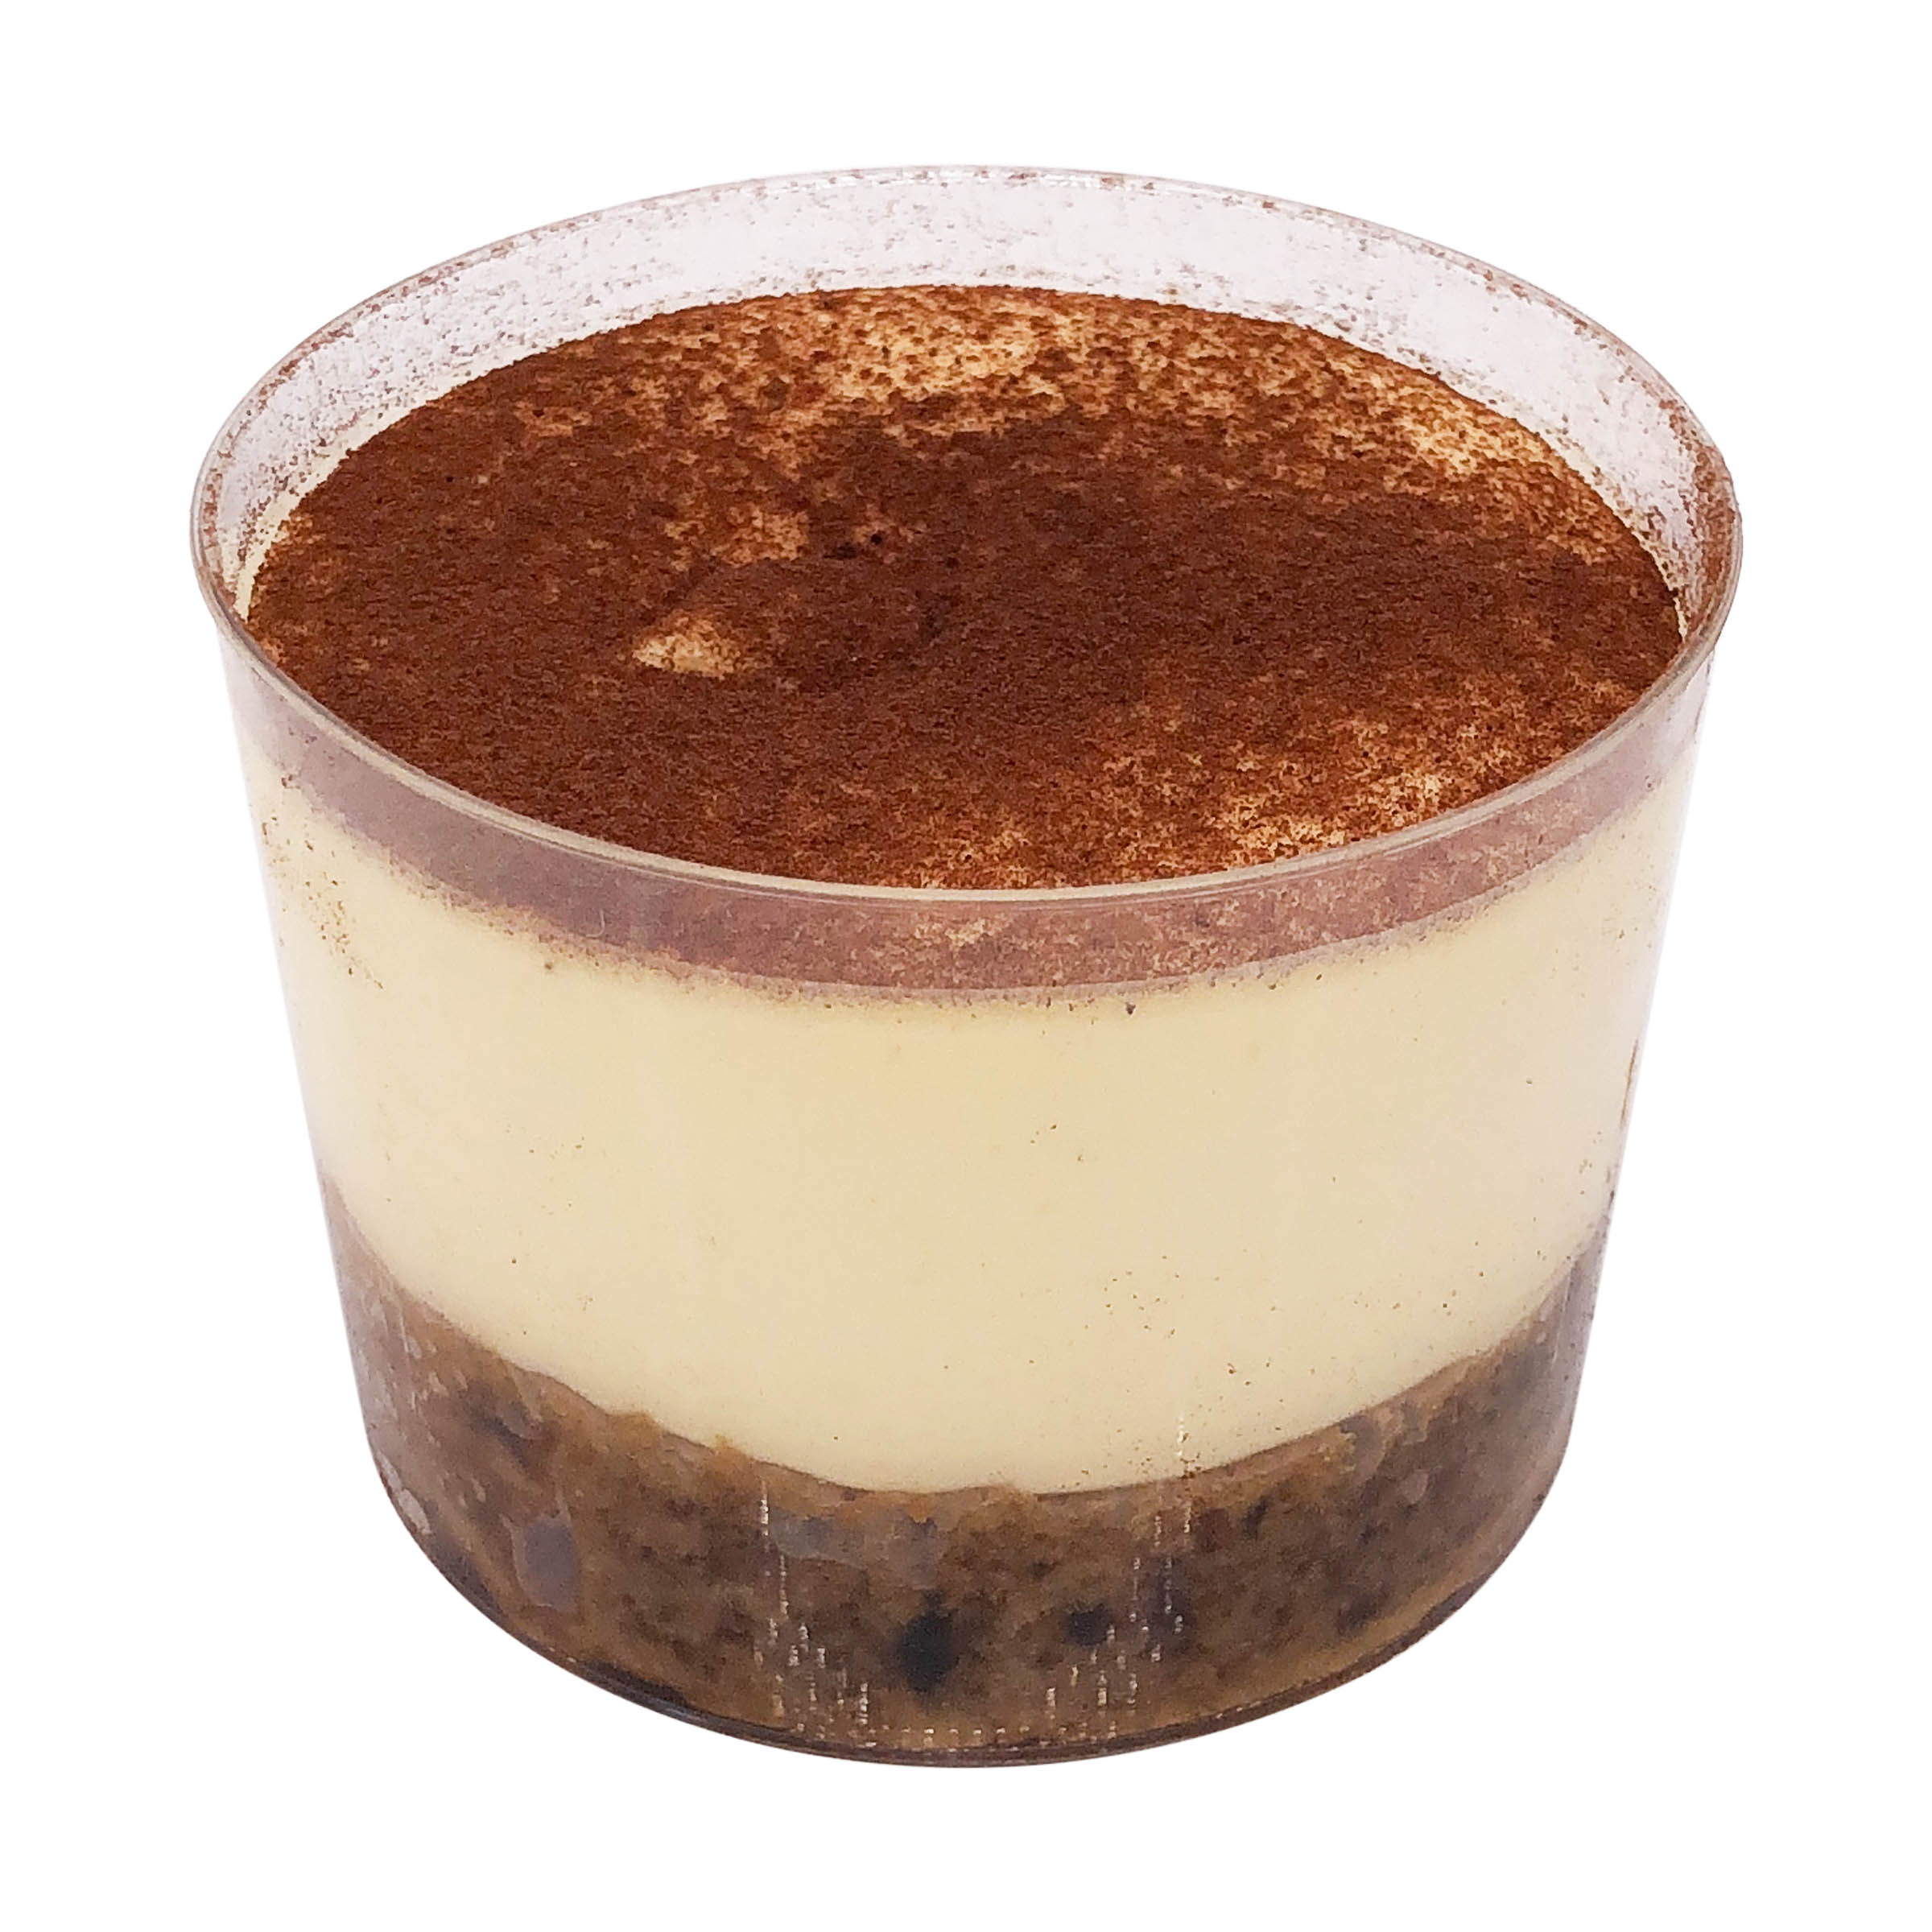 Tiramisu Dessert Cup Rocq Macaron Whole Foods Market